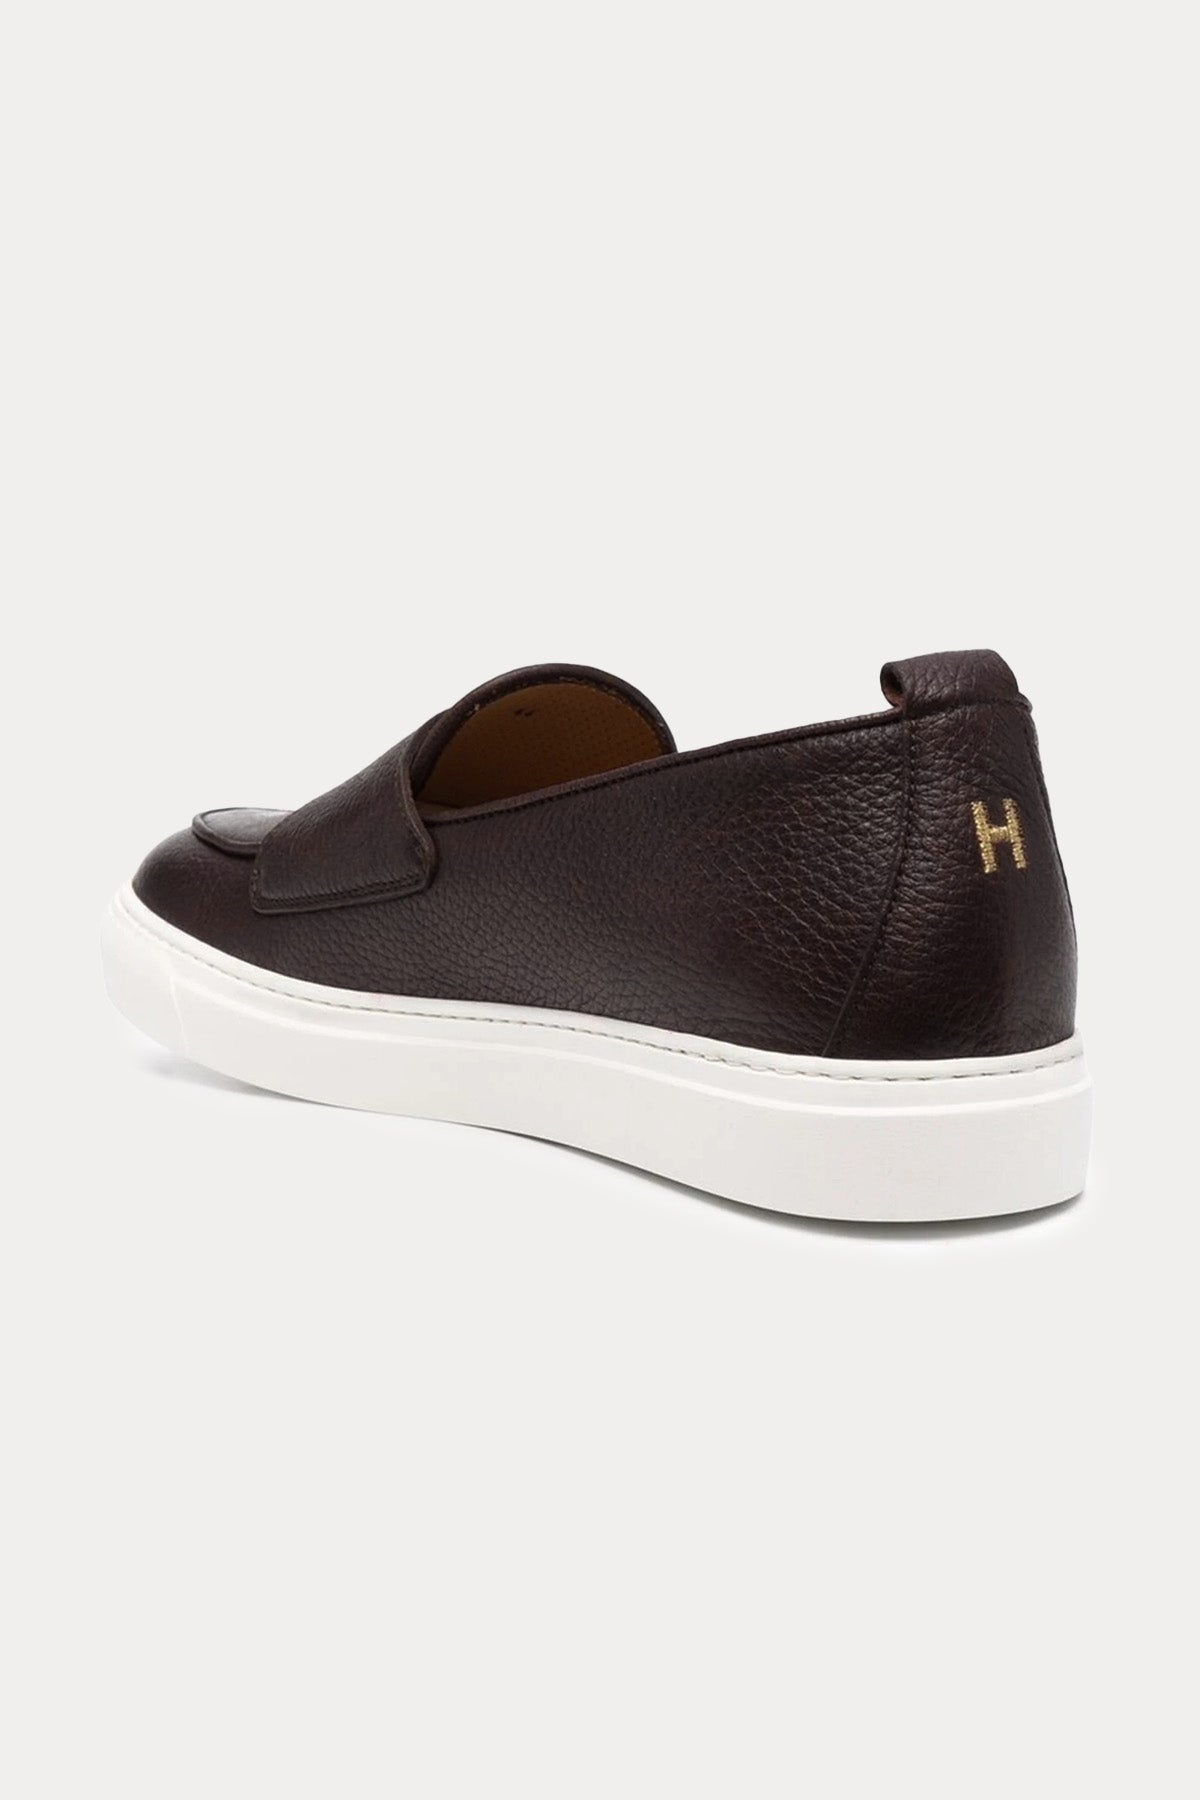 Henderson Theo Çift Tokalı Deri Monk Loafer Ayakkabı-Libas Trendy Fashion Store